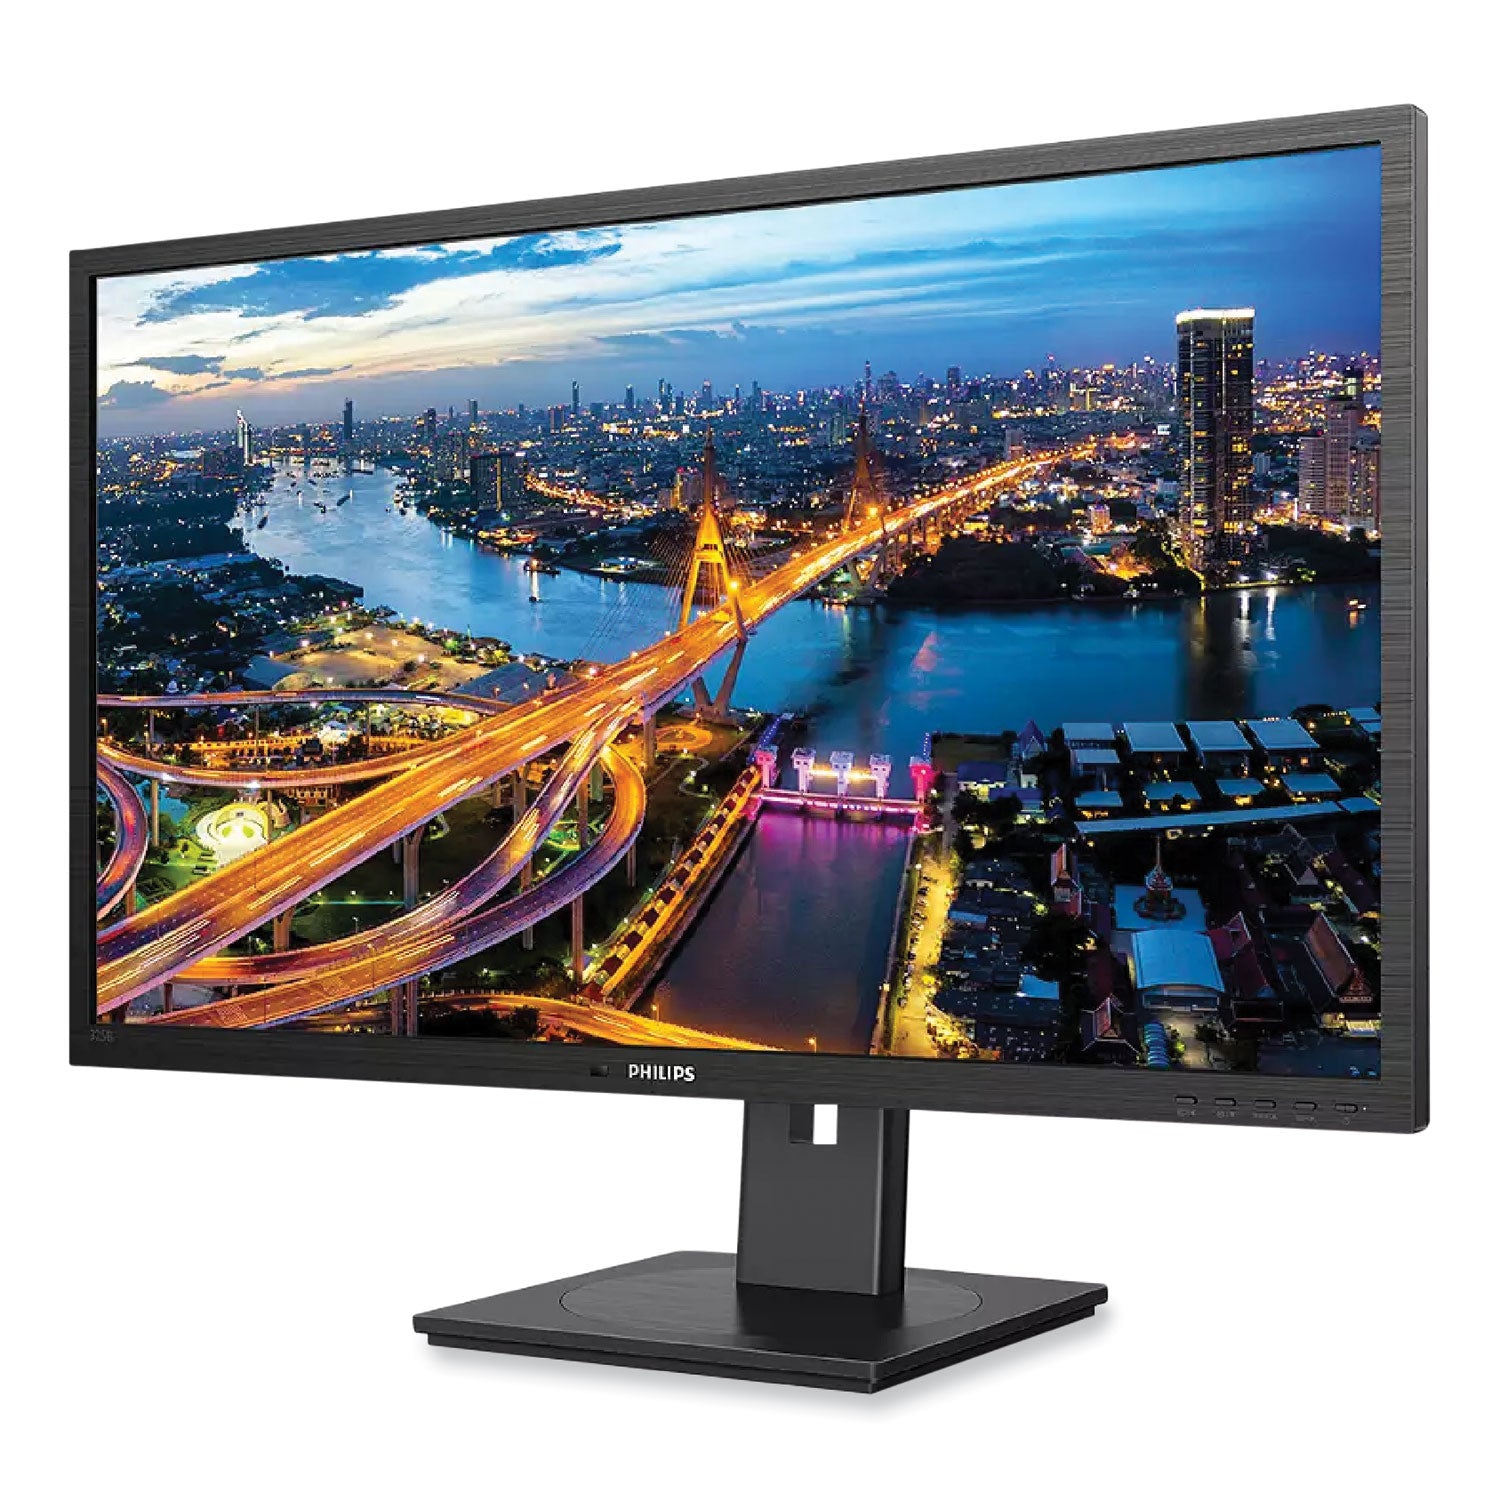 lcd-monitor-with-power-sensor-315-ips-panel-2560-pixels-x-1440-pixels_psp325b1l - 4